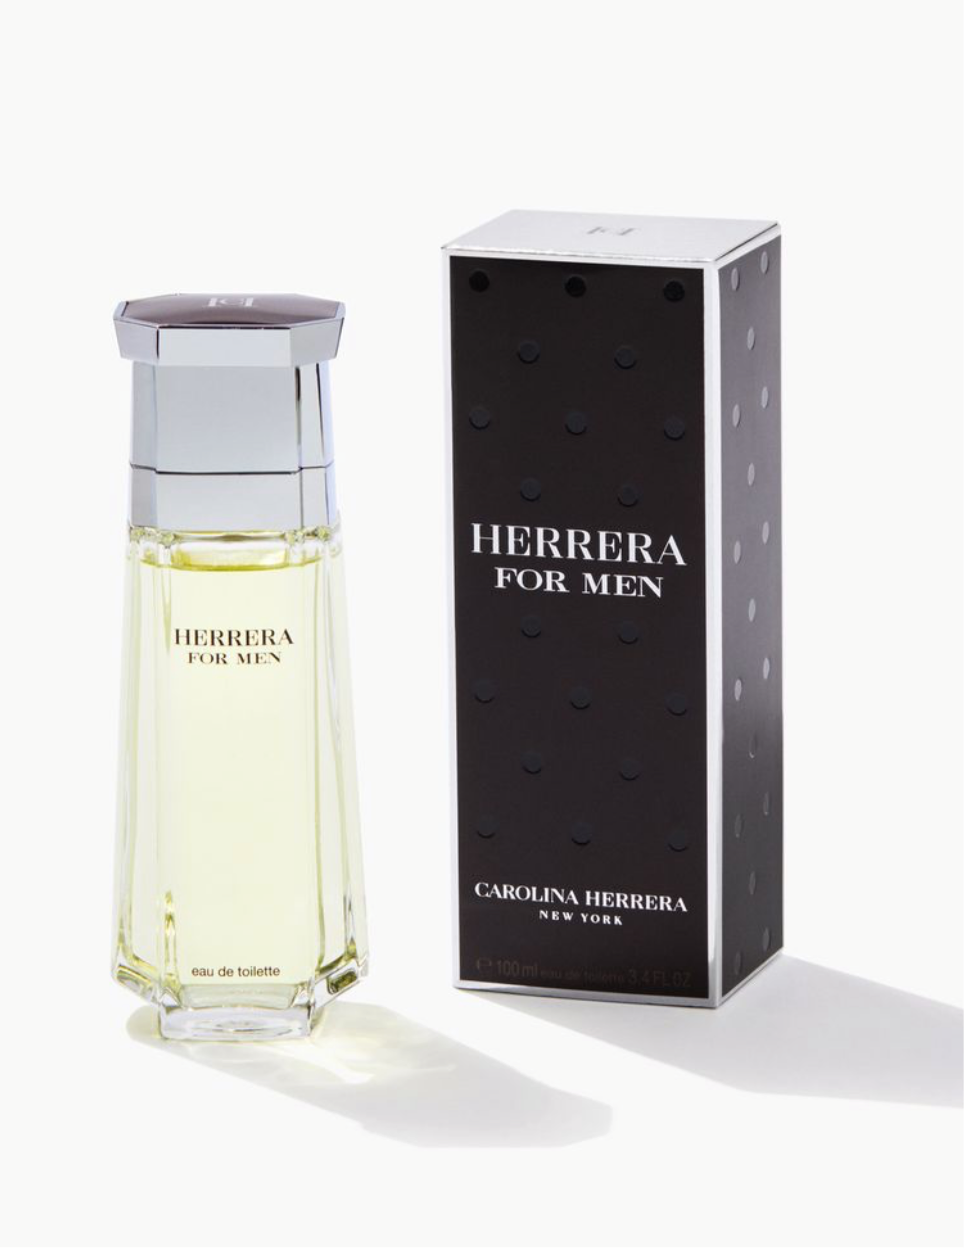 HERRERA FOR MEN